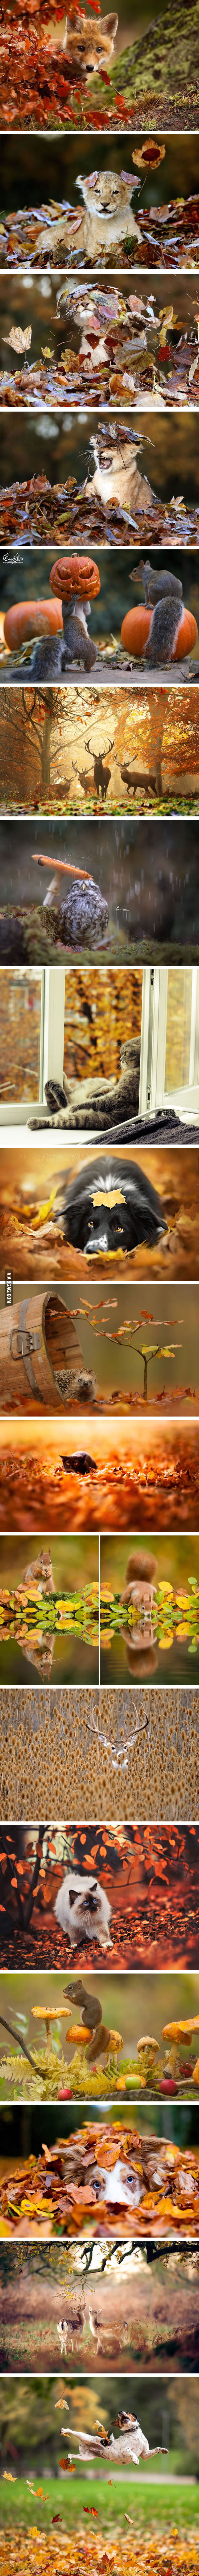 16 Animals Enjoying The Magic Of Autumn